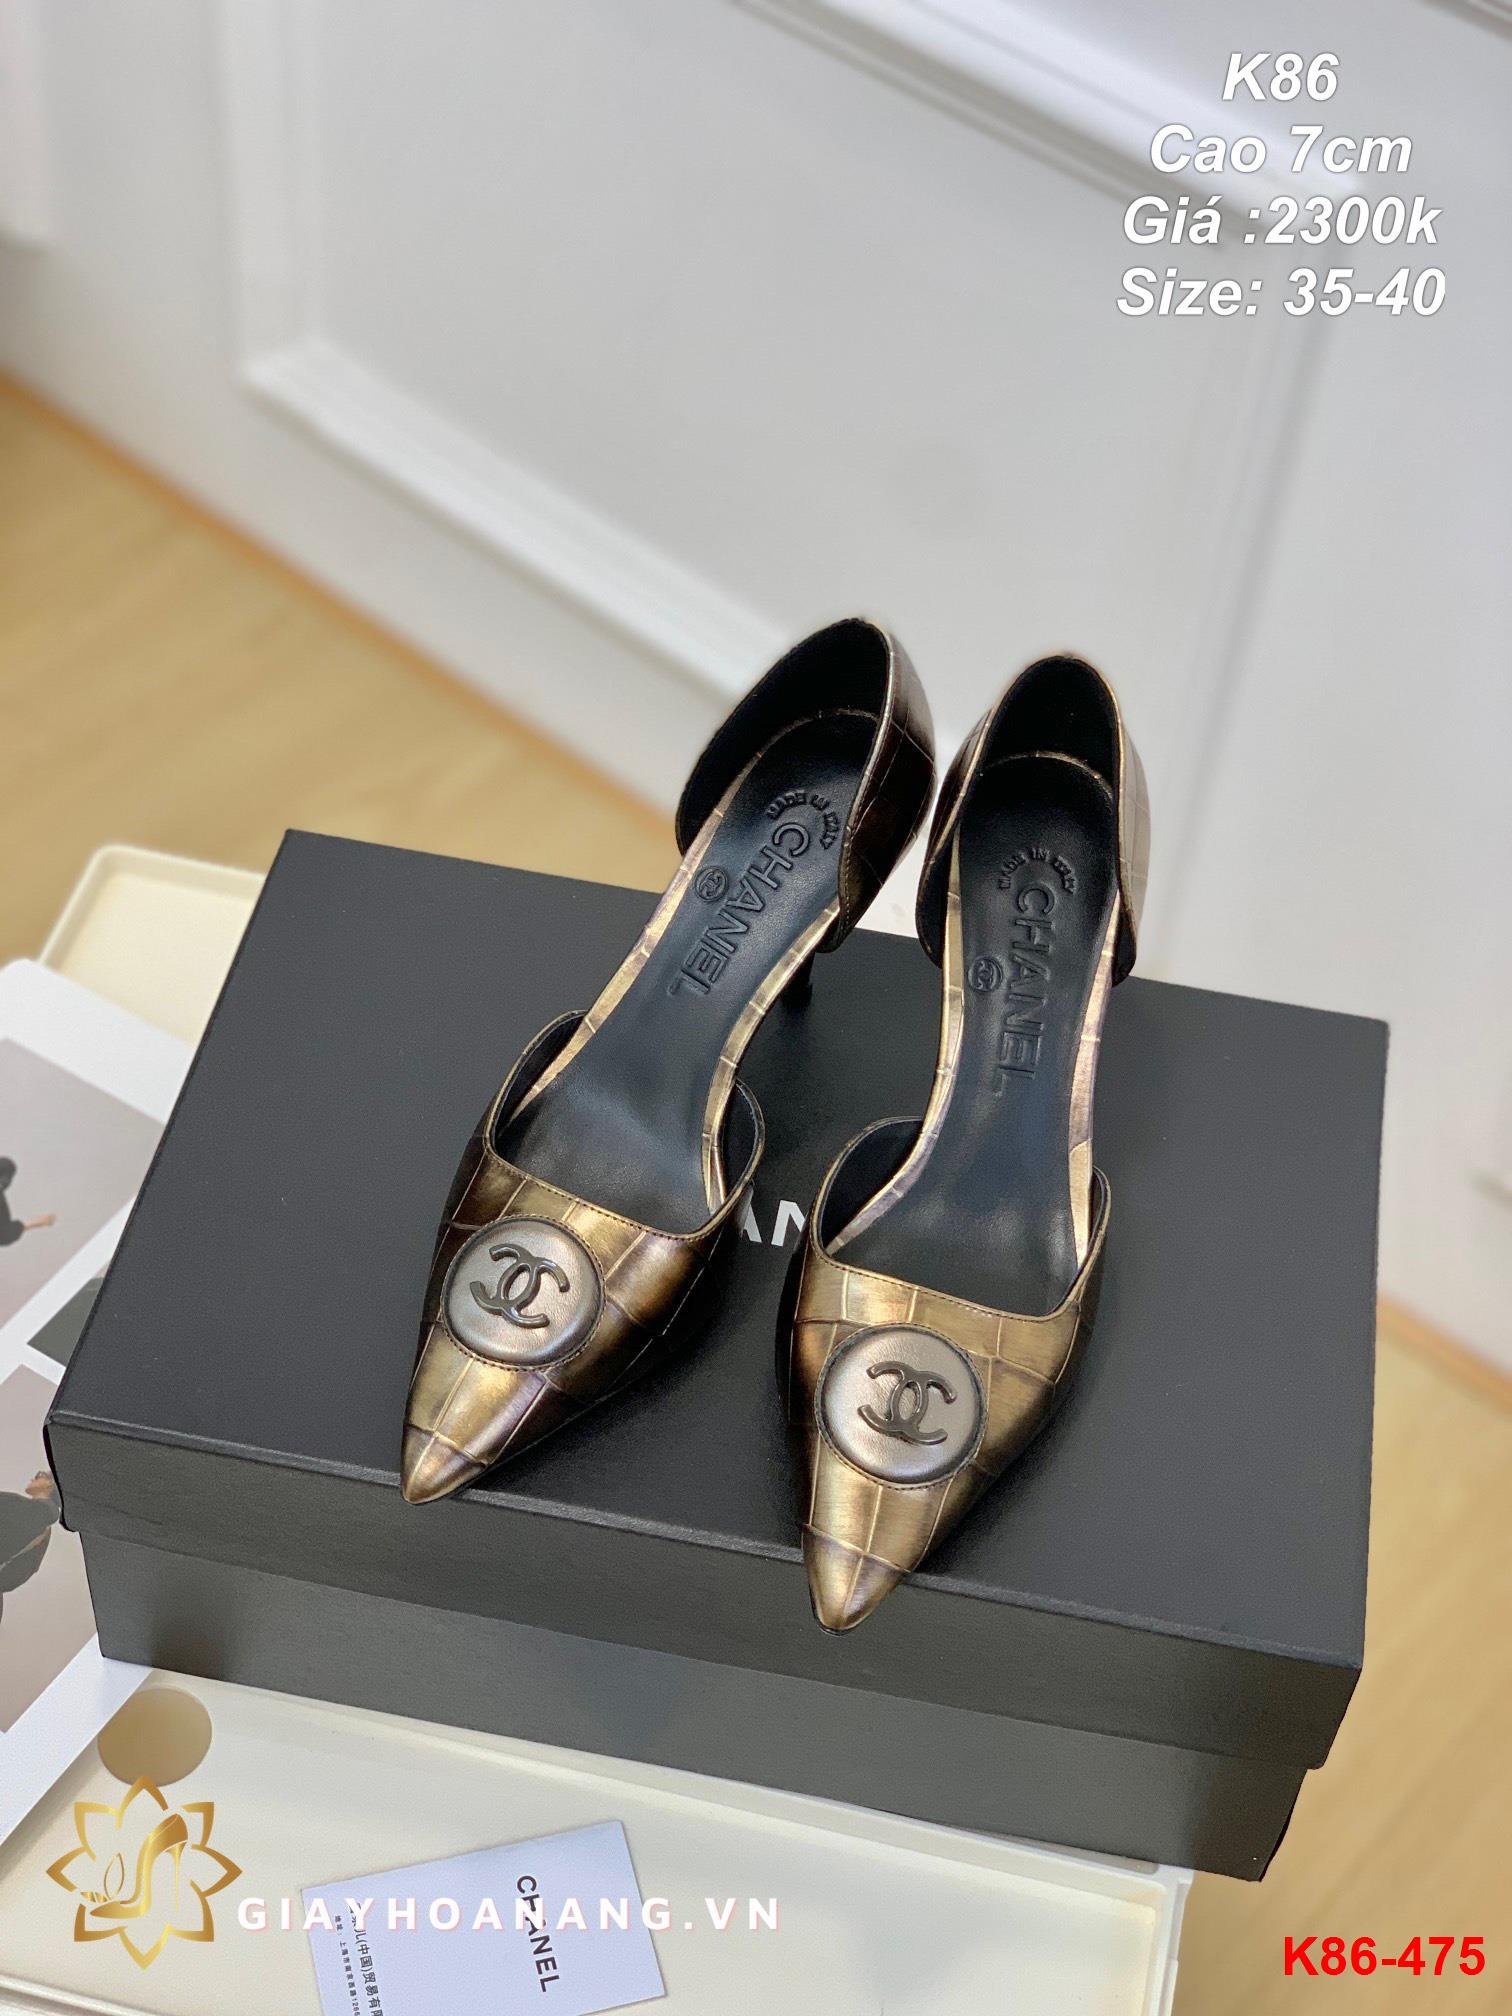 K86-475 Chanel giày cao 7cm siêu cấp